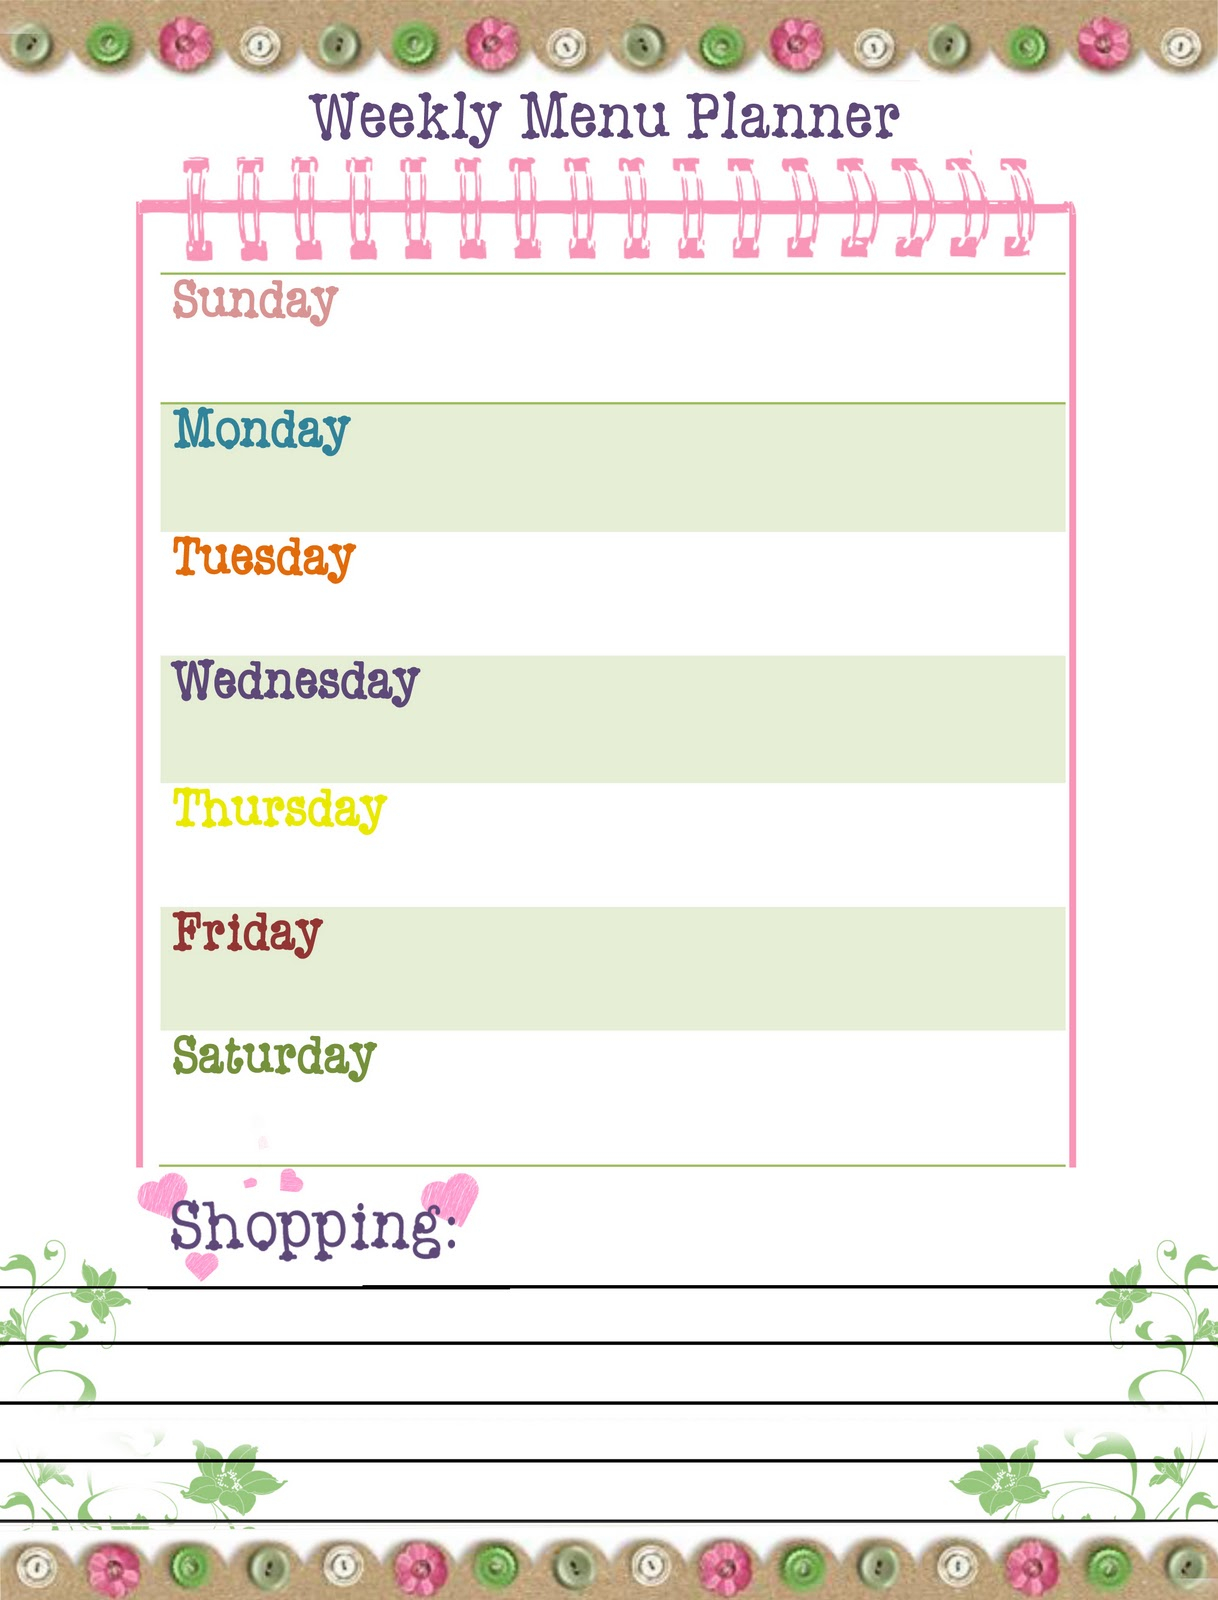 Our Way To Learn Weekly Menu Planner free Printable 